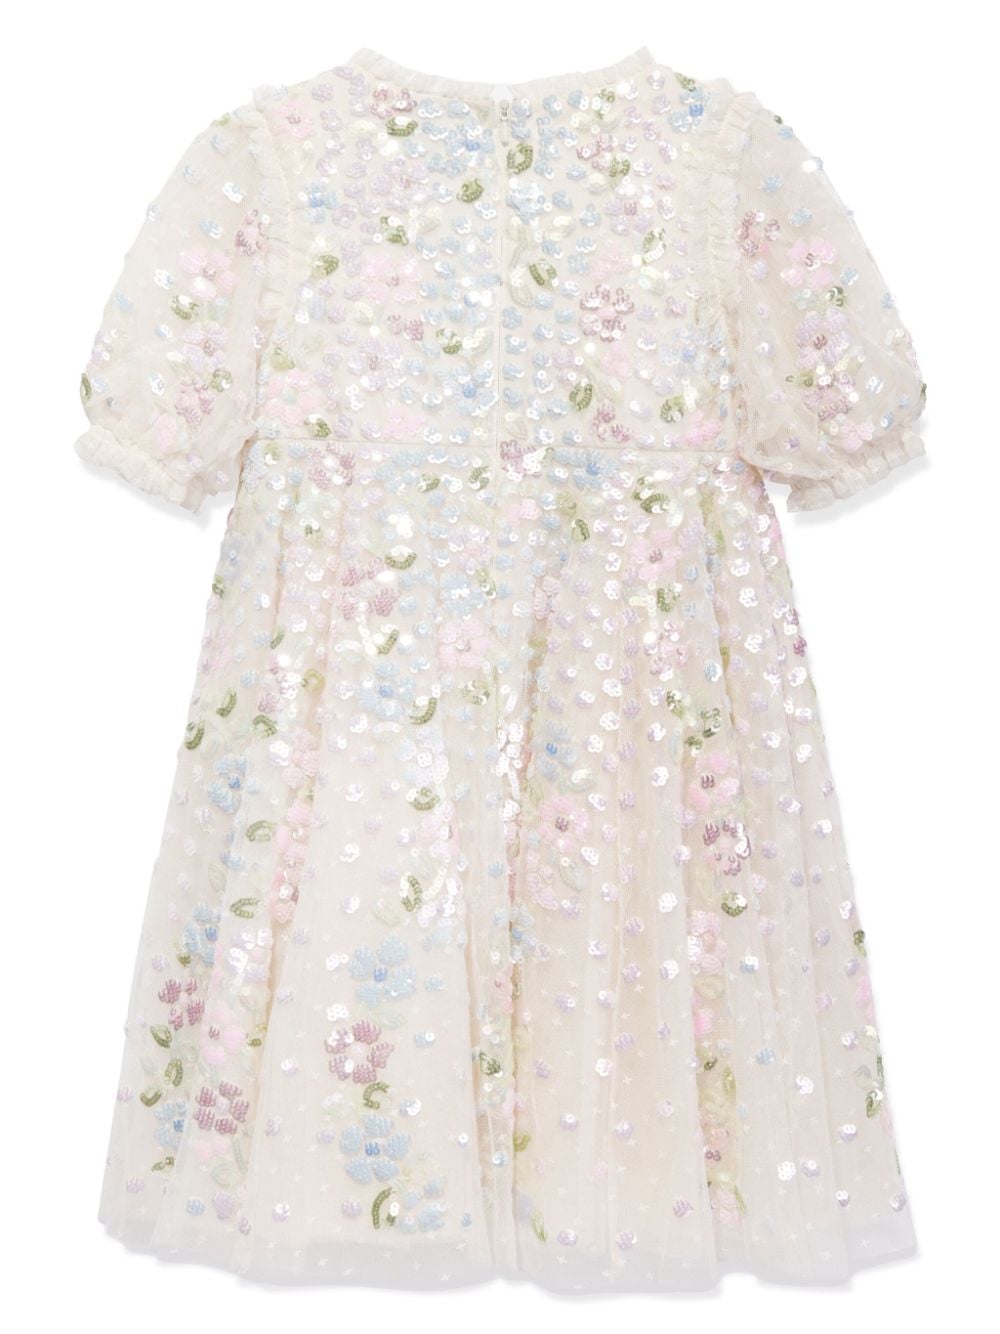 NEEDLE & THREAD KIDS floral-embroidered dress - Beige